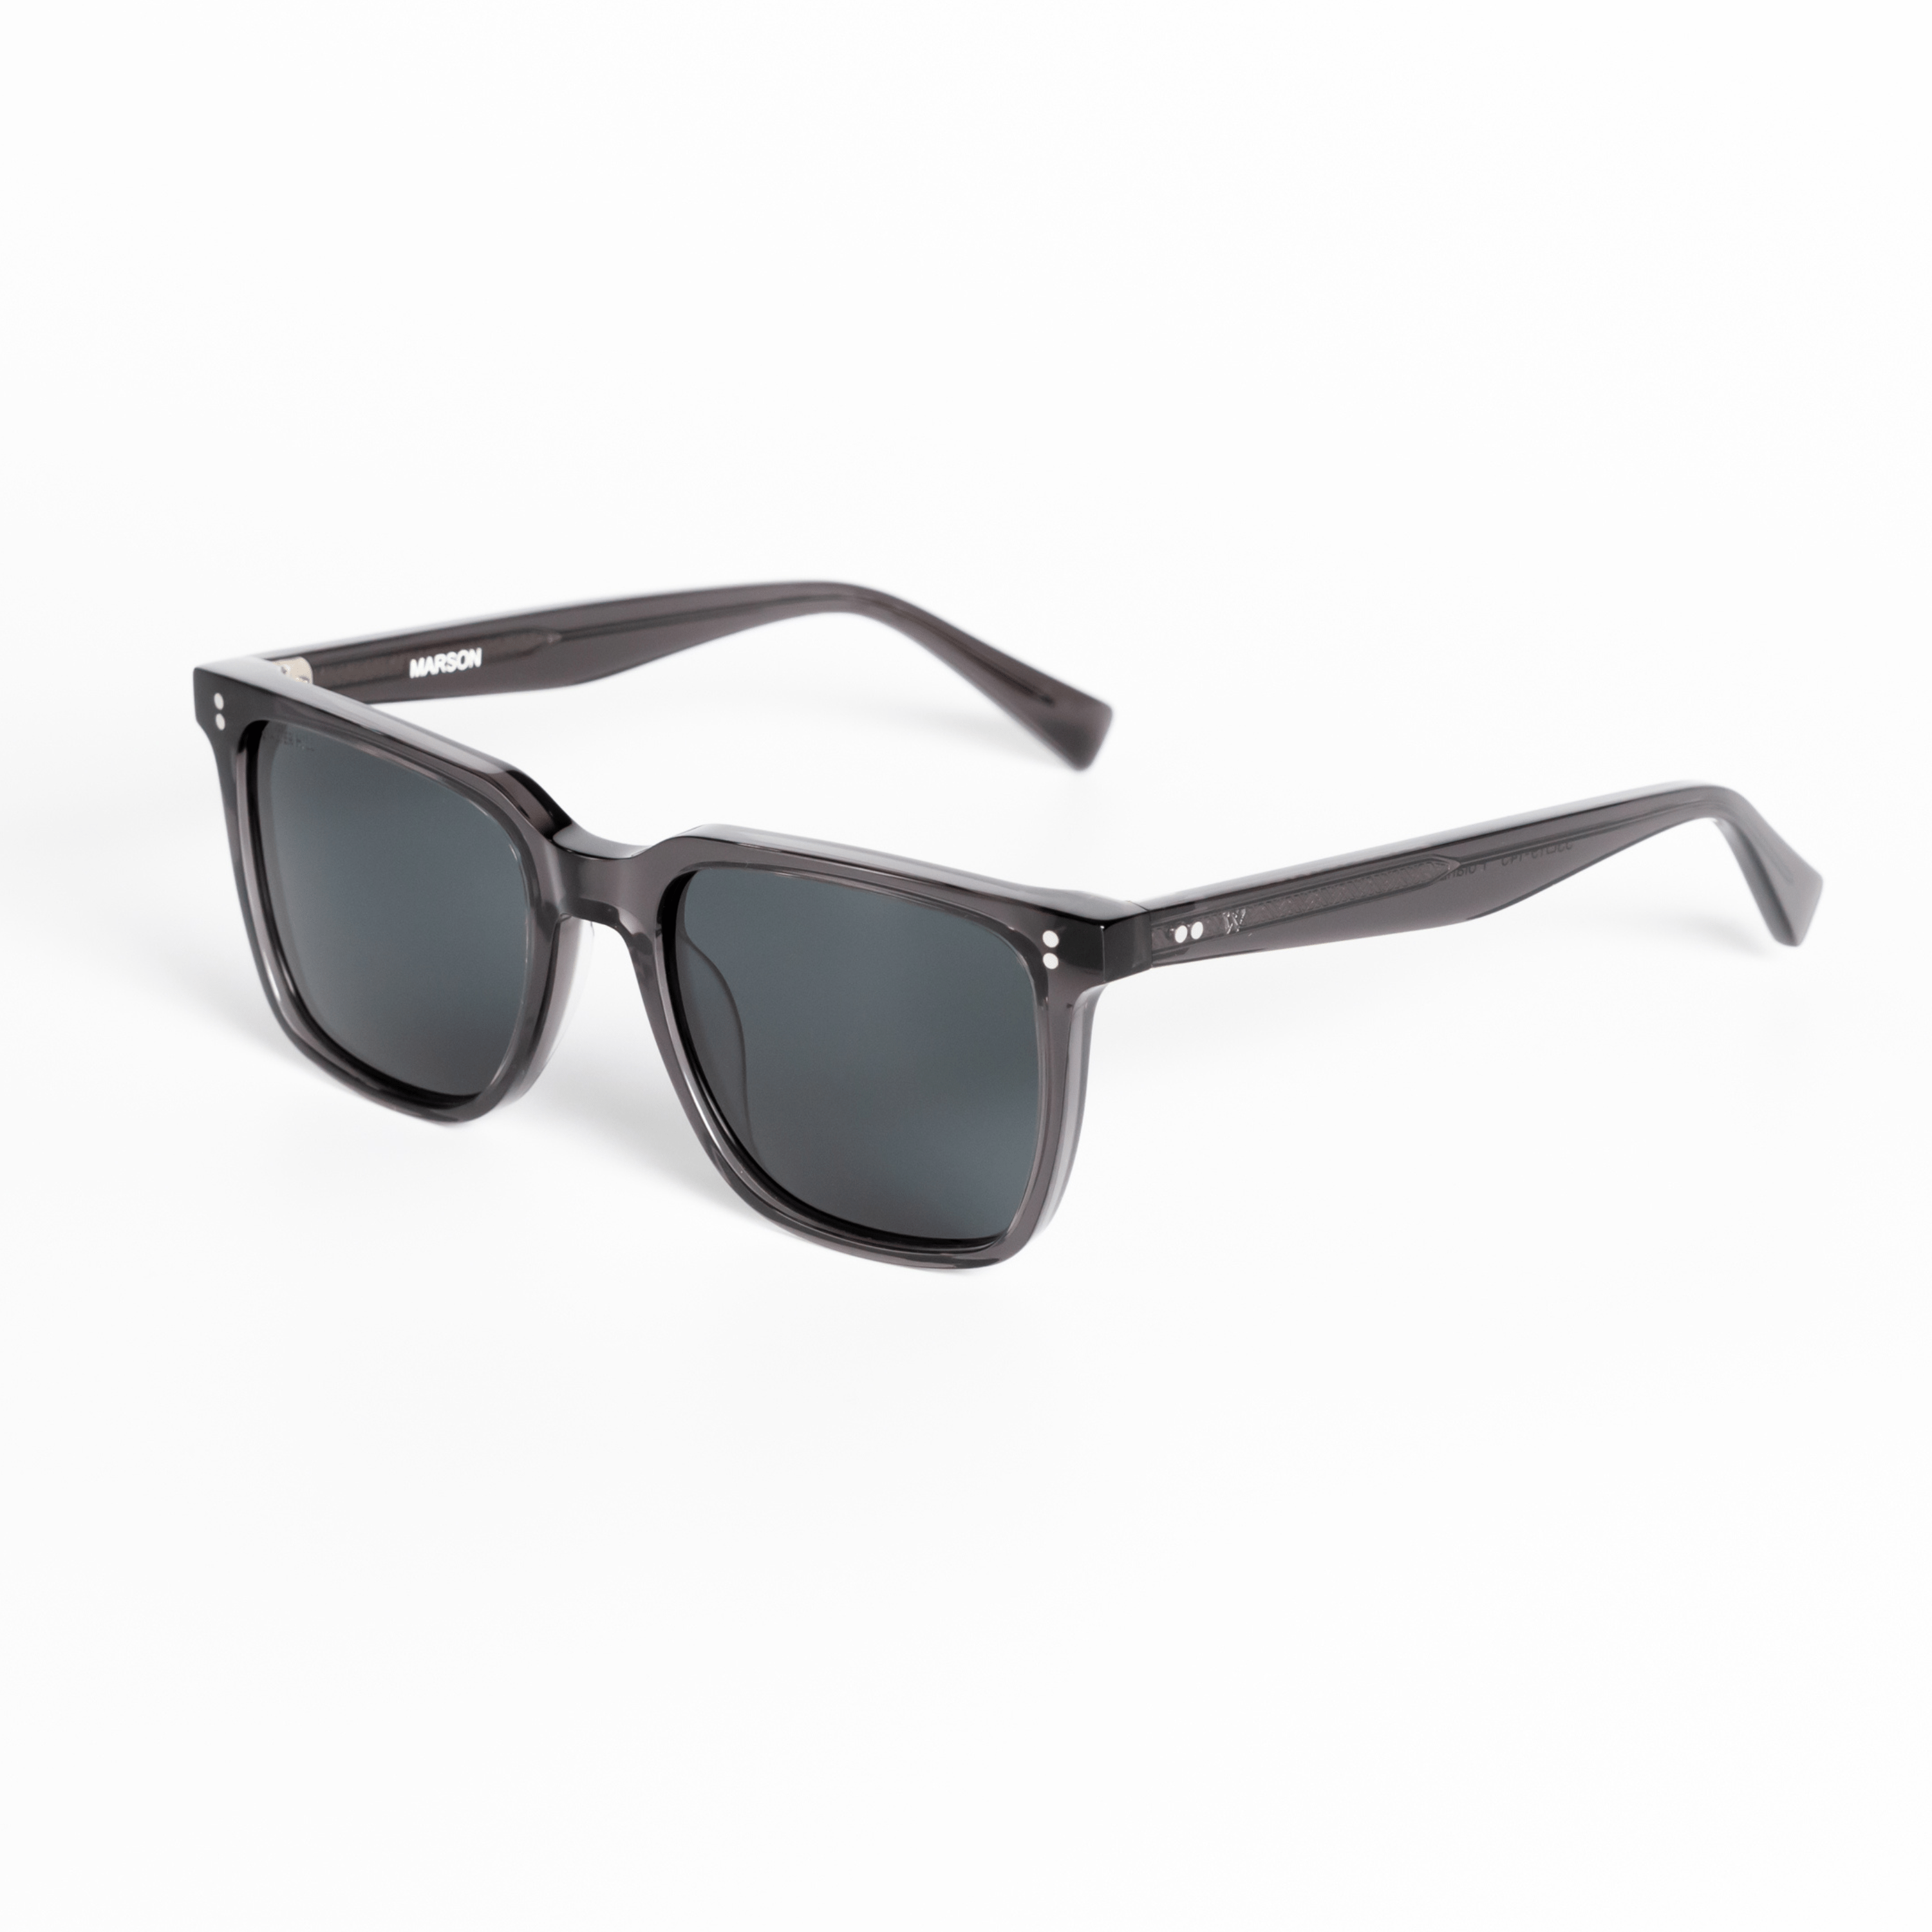 Walter Hill Sunglasses Gray / Standard / Polarized Cat.3 MARSON - Dark Gray